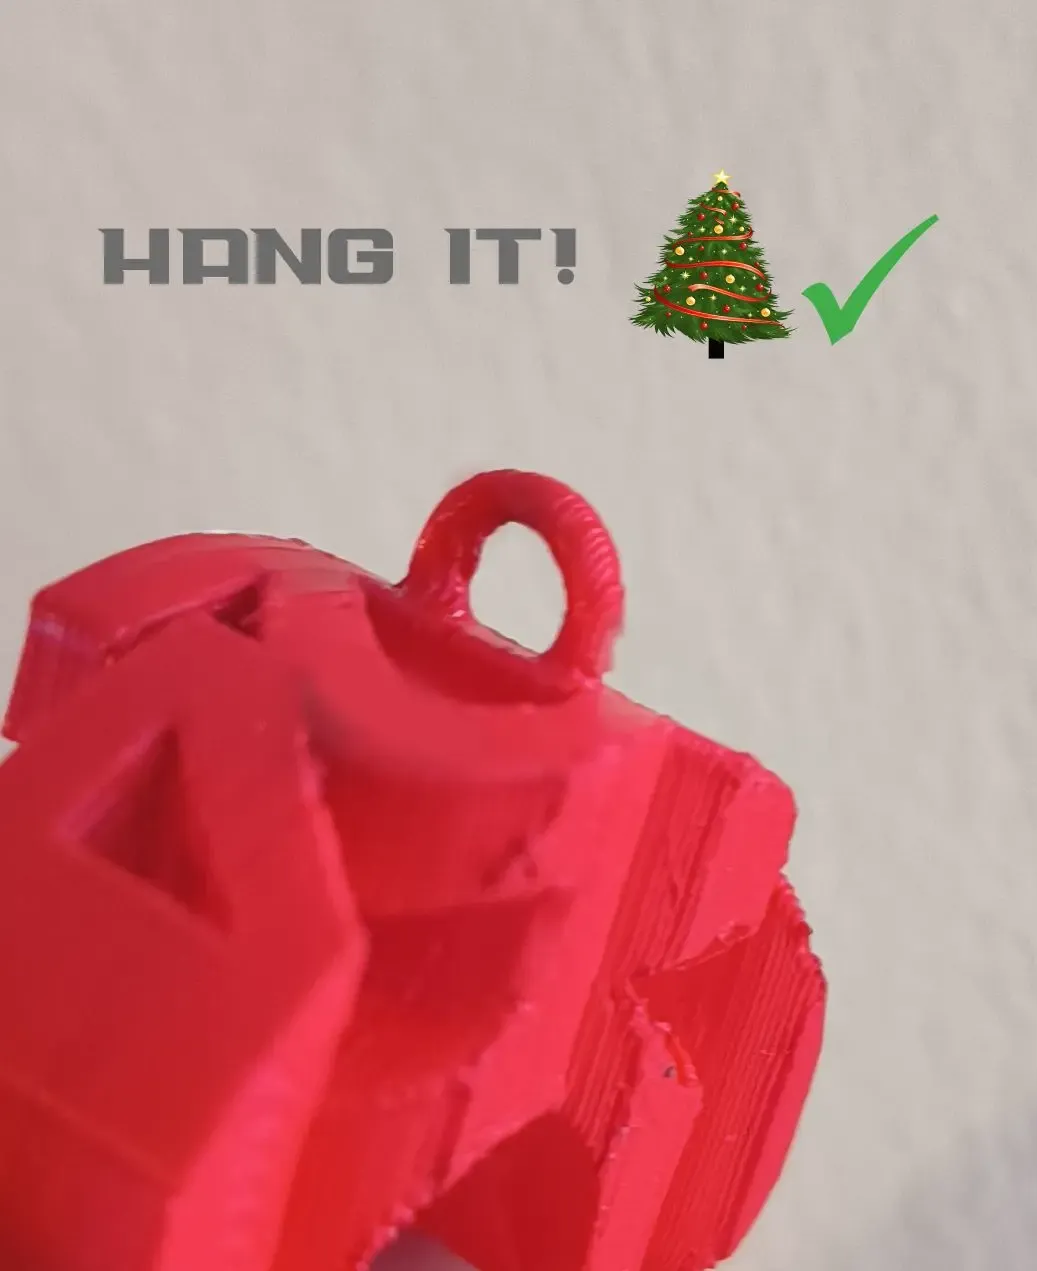 Text Flip - 2024 Christmas tree